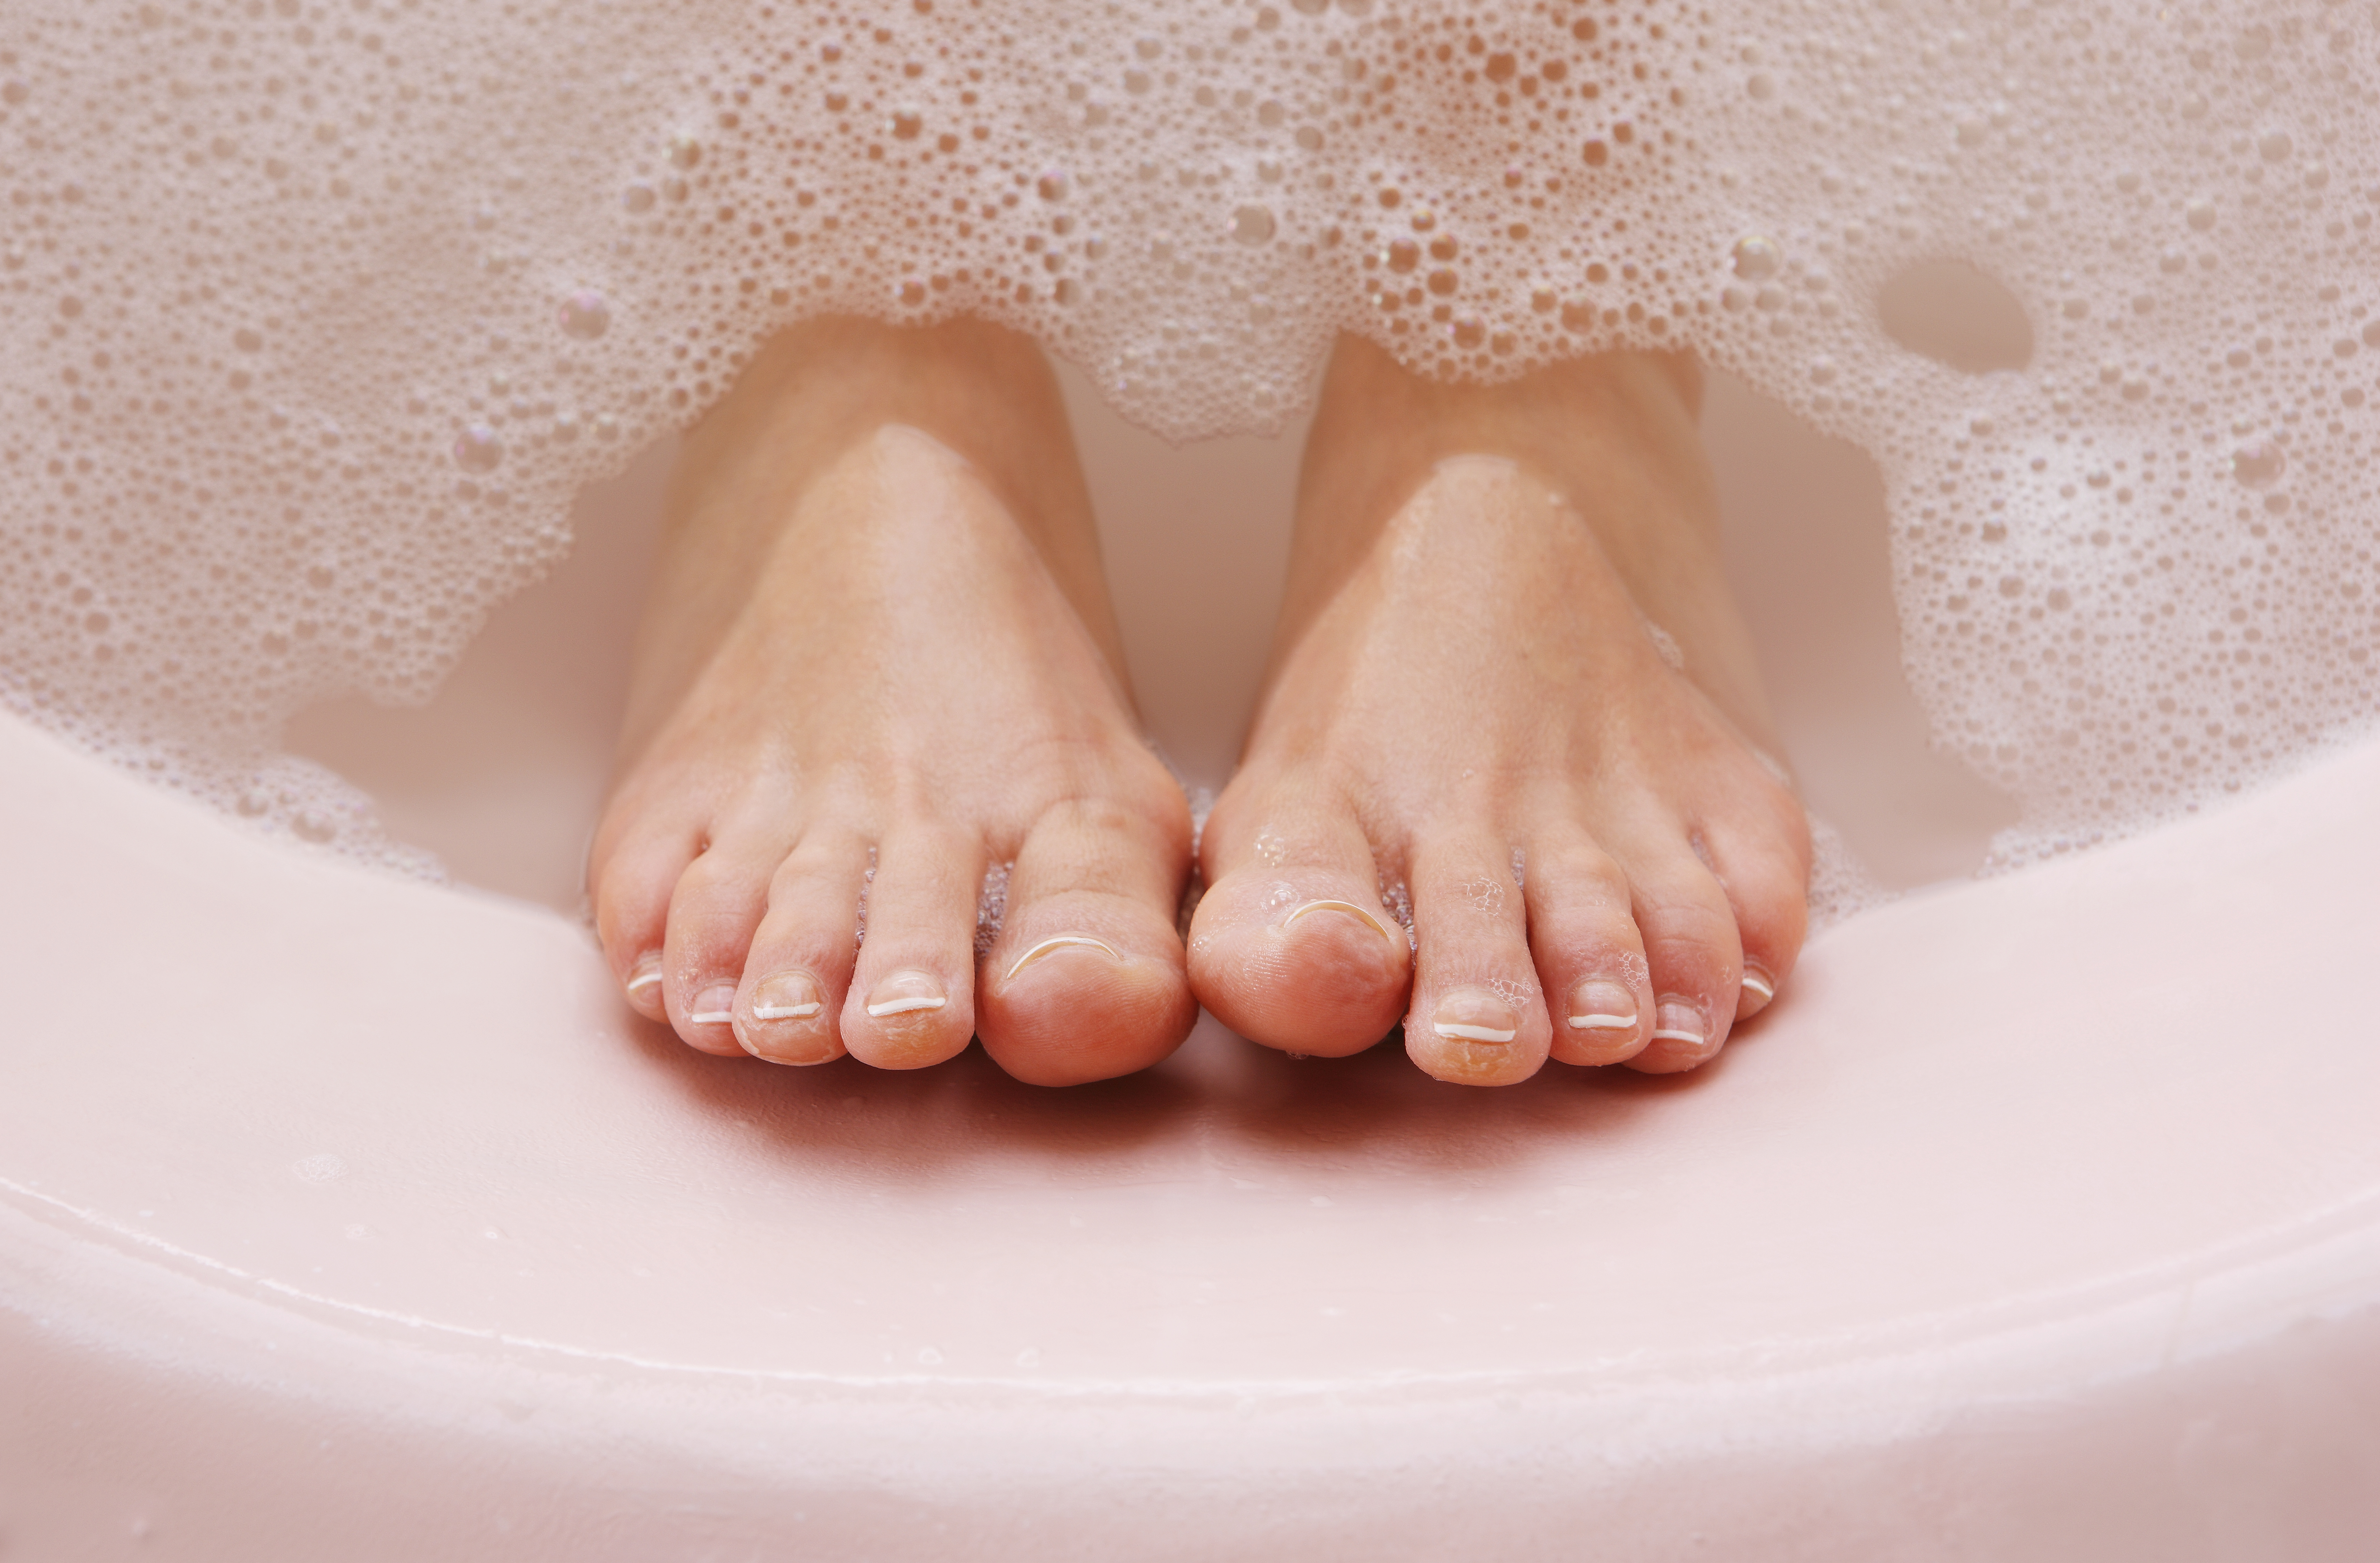 foot bath to get rid of dead skin